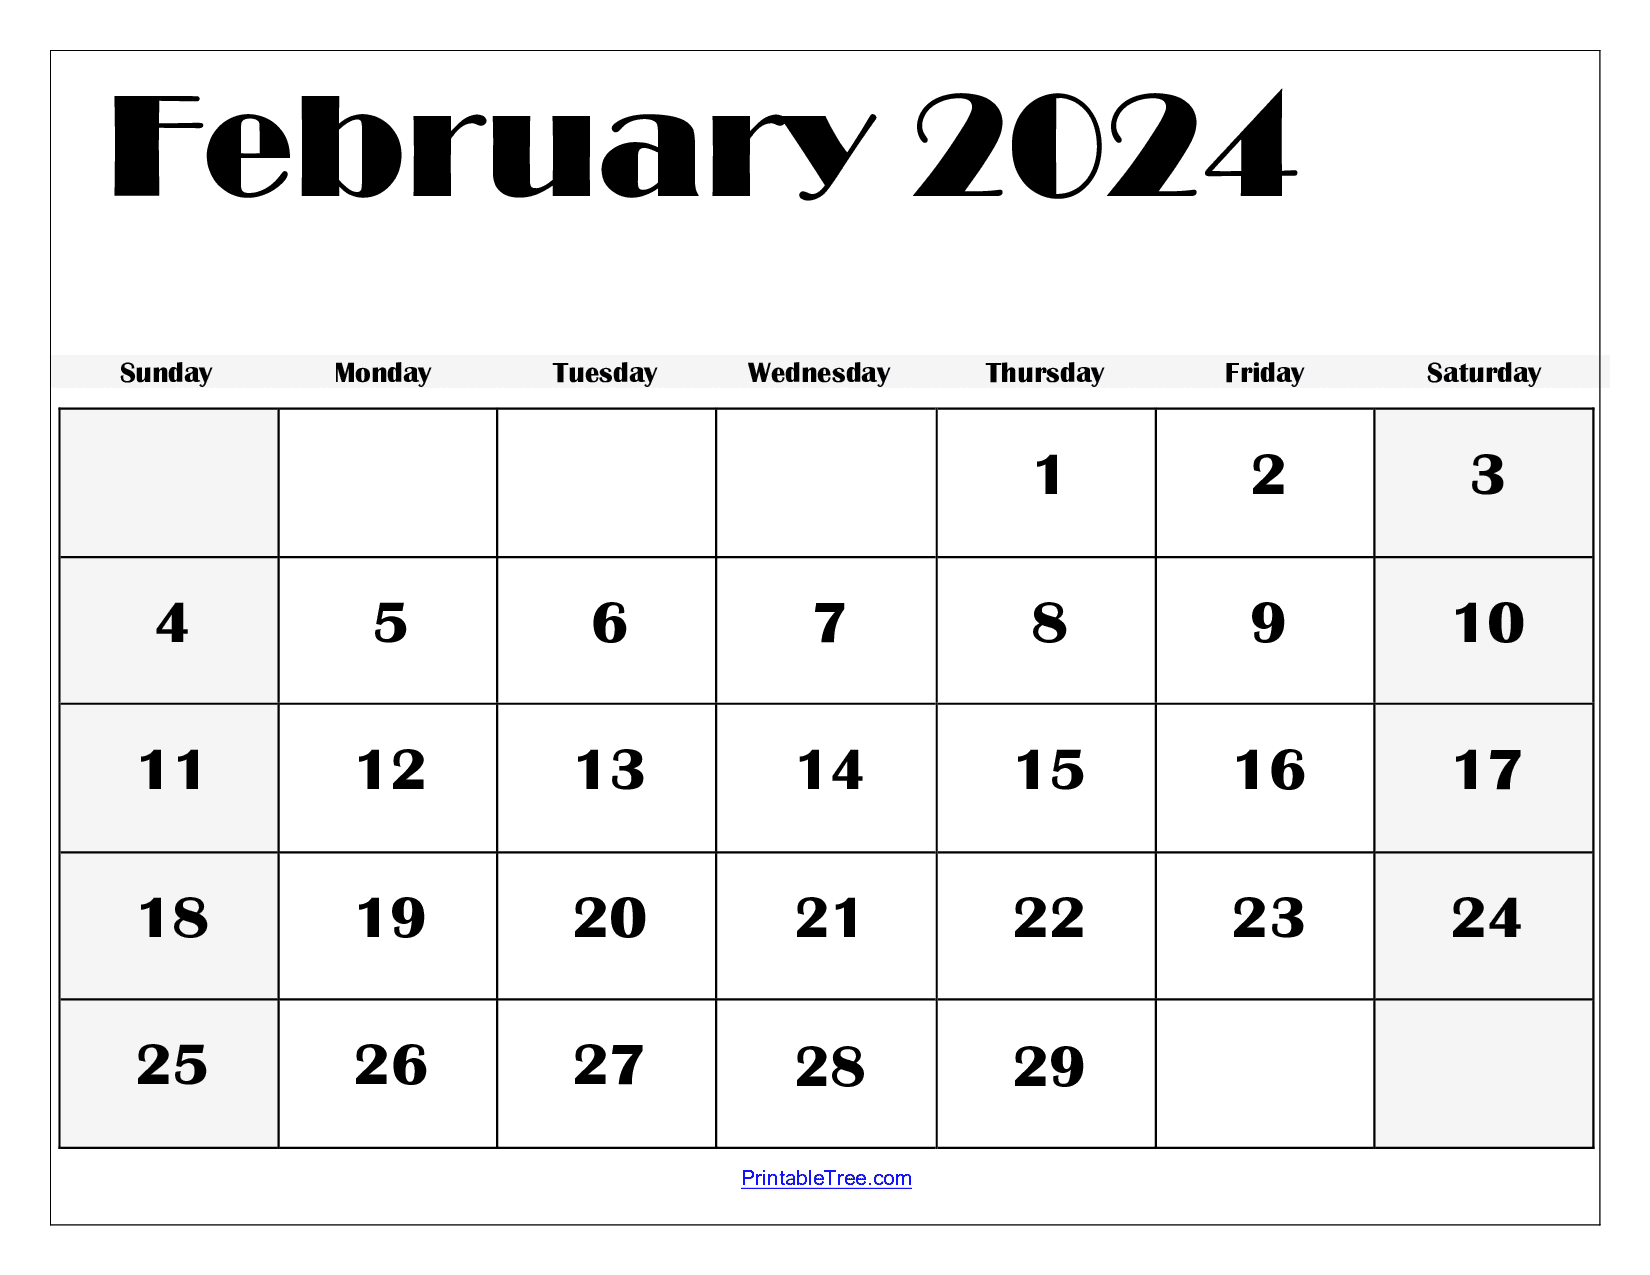 February 2024 Calendar Printable Pdf Template With Holidays for Printable February Calendar 2024